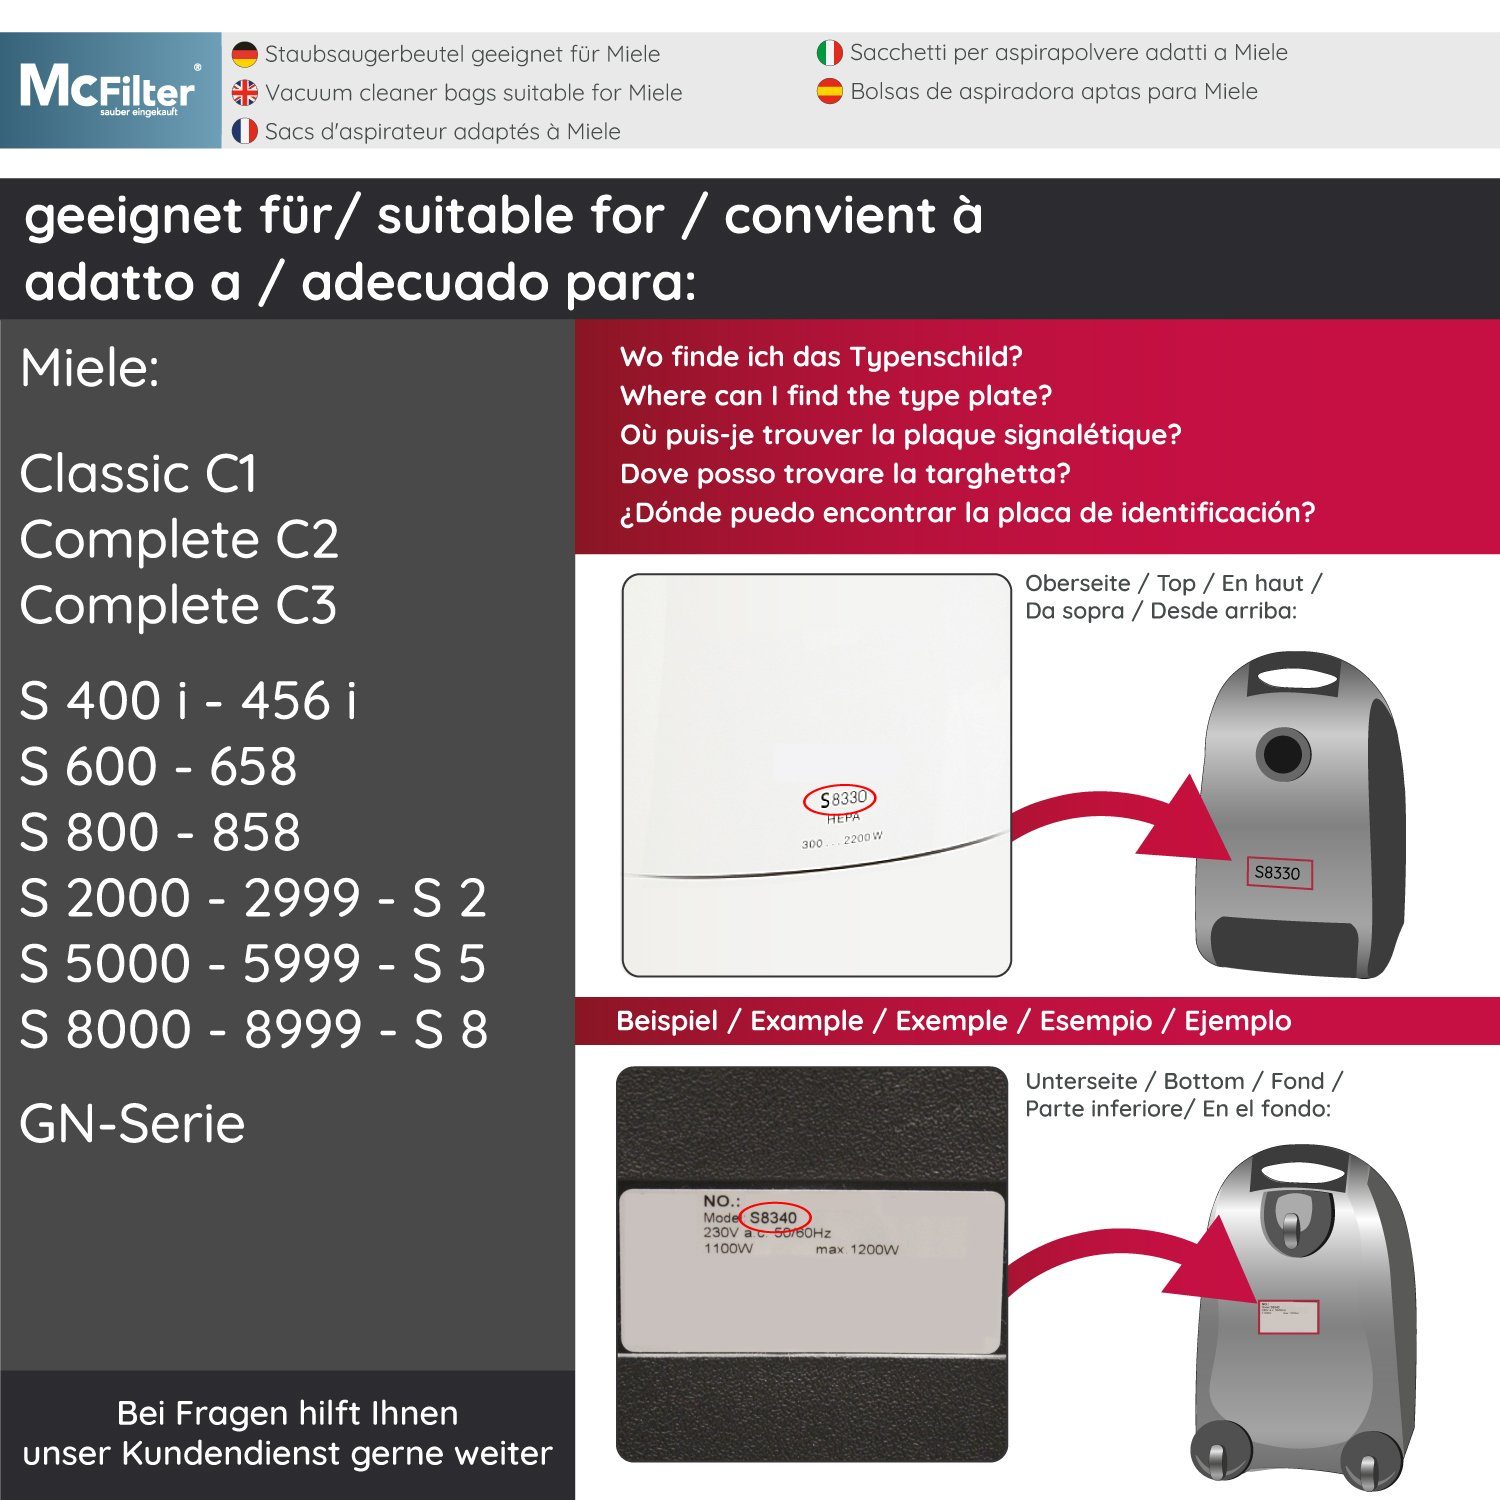 Serie Top Miele - Filter, 16 >MAXI Staubsaugerbeutel (16+8), für 8 9917730, wie BOX< S456i passend Alternative Miele zu inkl. S400i McFilter Staubsauger, St., 10408410